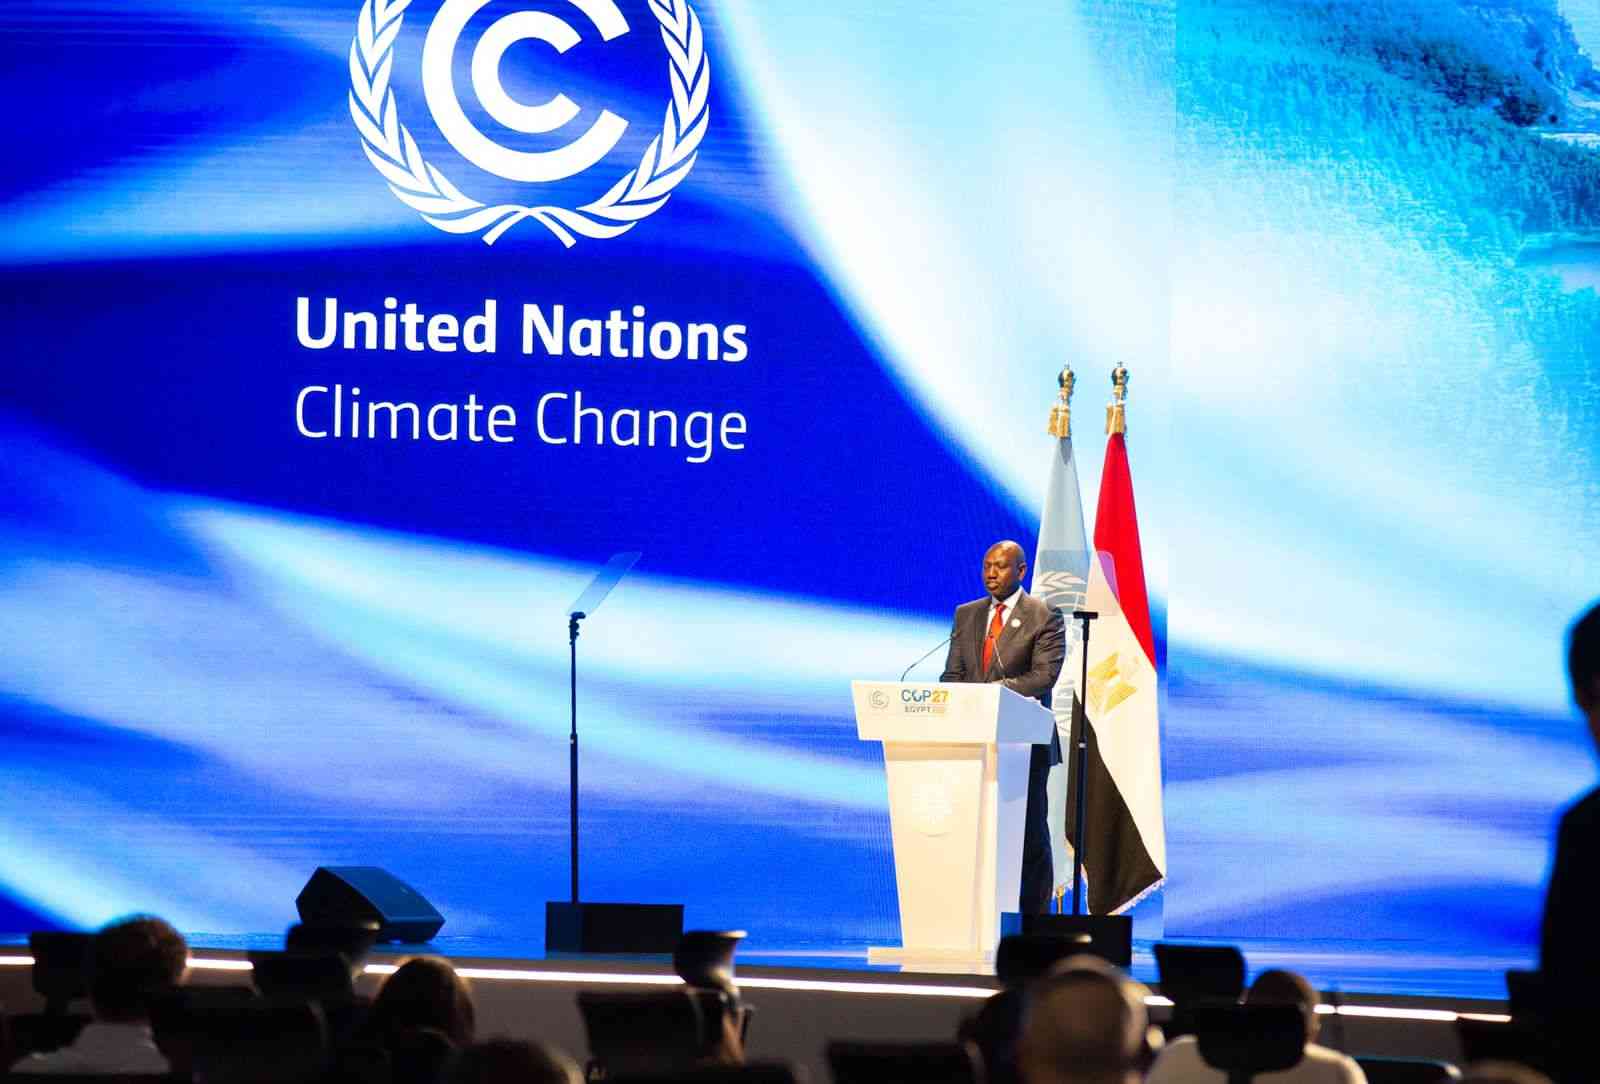 William Ruto's address at COP27 - Full Speech